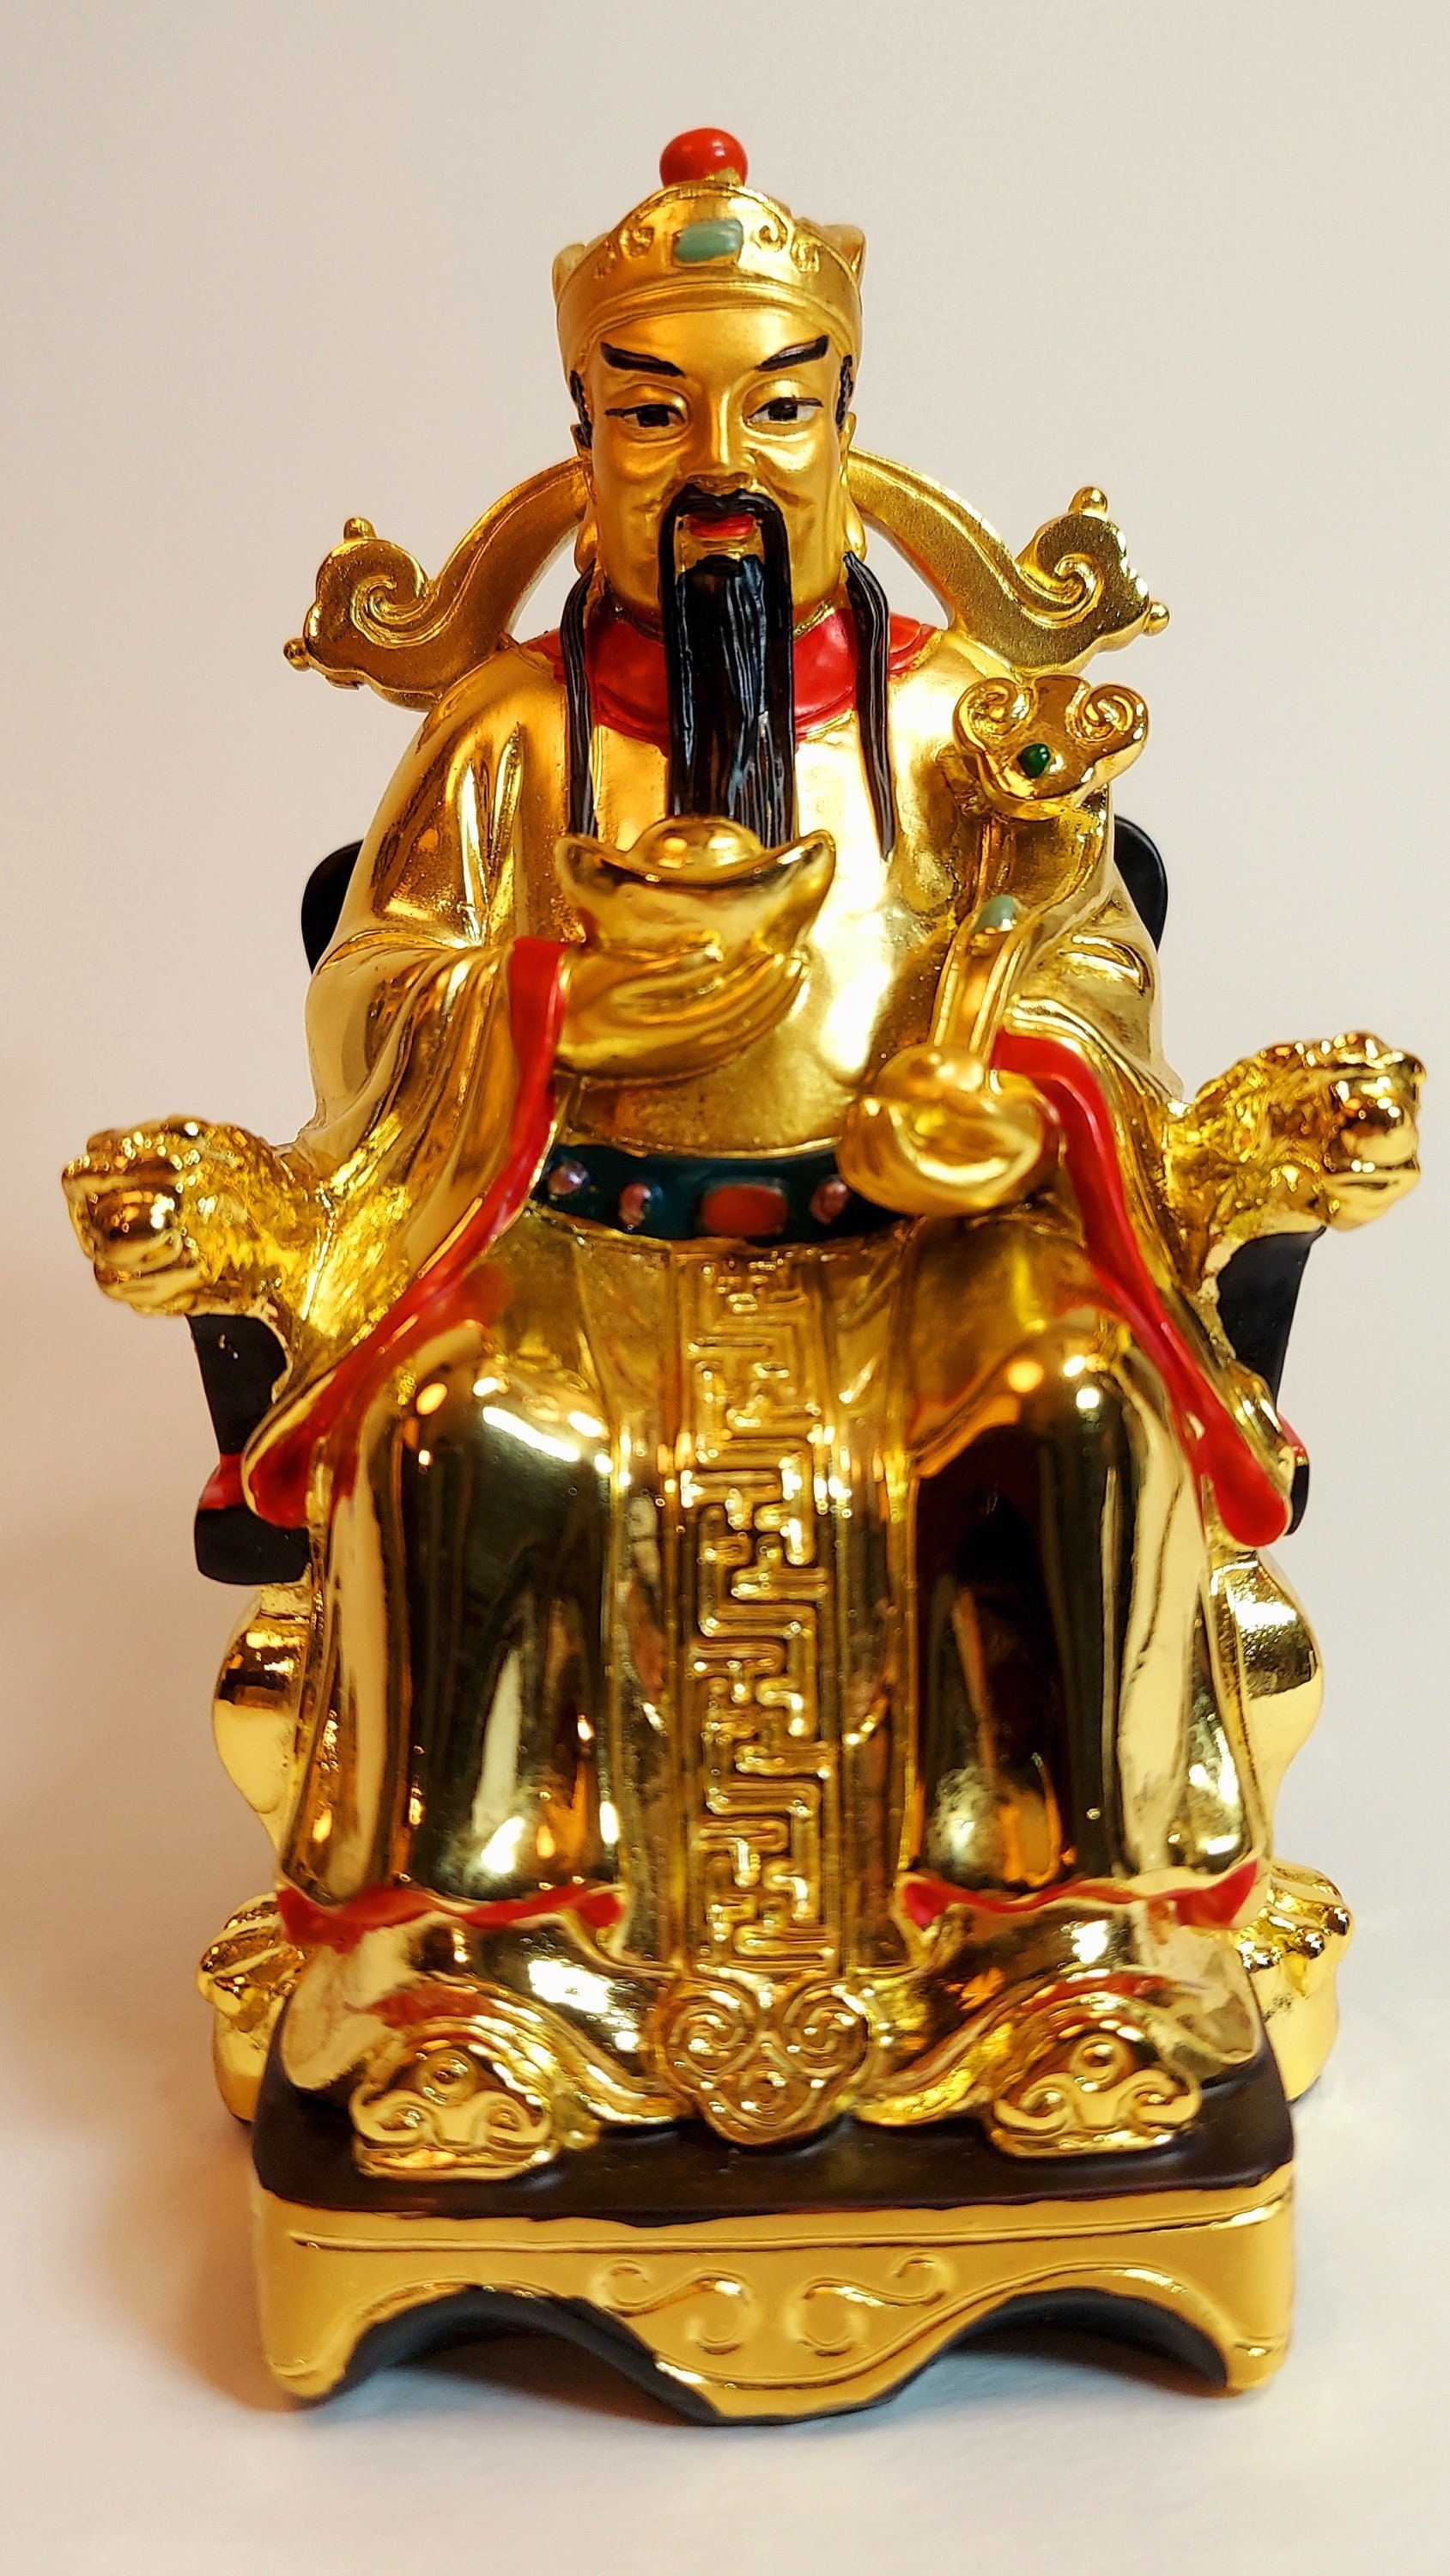  Feng Shui Statue Handgefertigte Tierkreis-Kaninchen-Ornamente,  Polygone, Skulptur, dekorativ, Feng Shui, Reichtum, Wohlstand Feng Shui  Dekoration (Size : S)